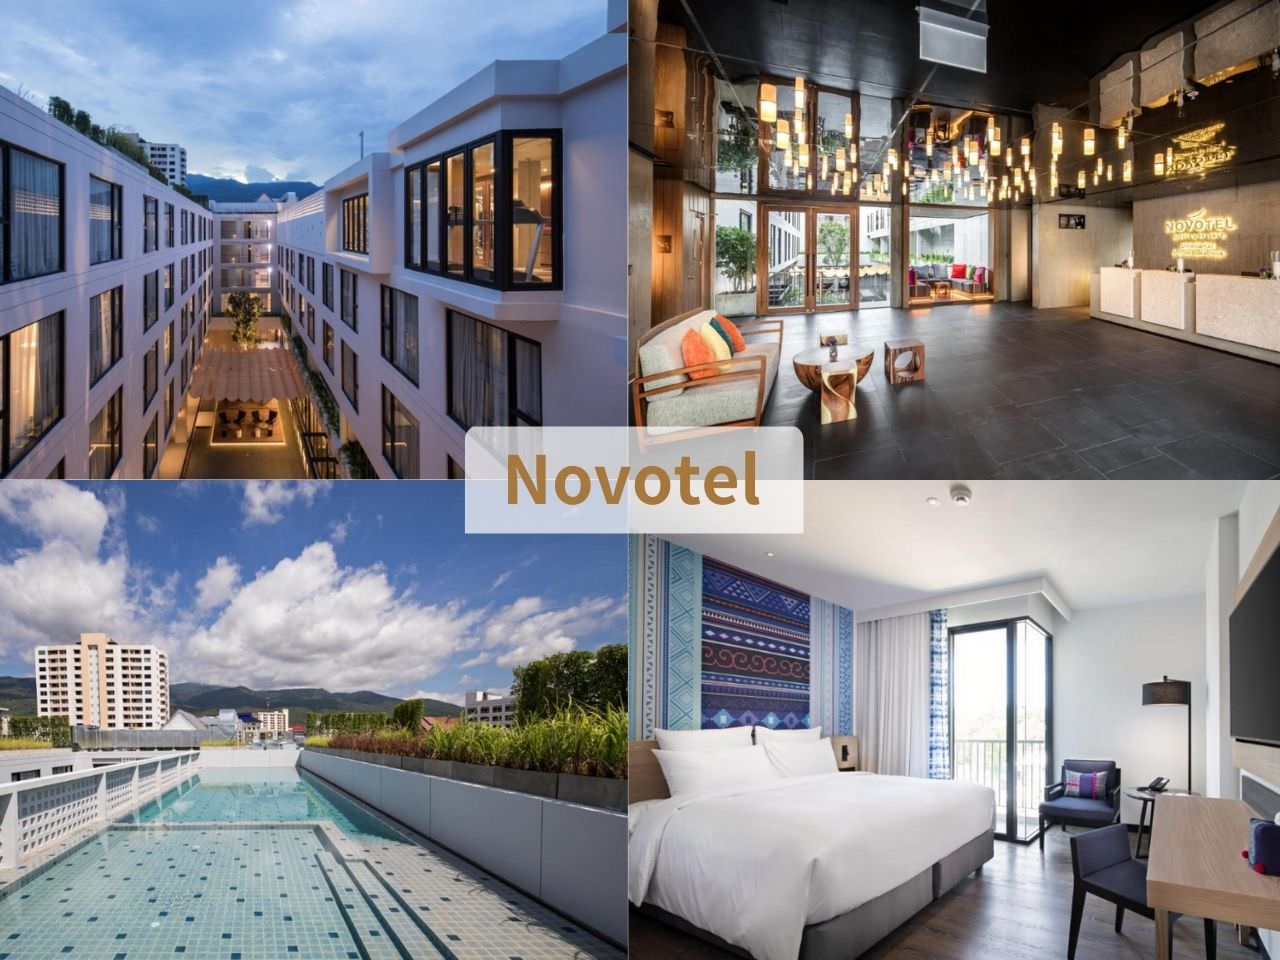 Novotel Chiangmai Nimman Journeyhub